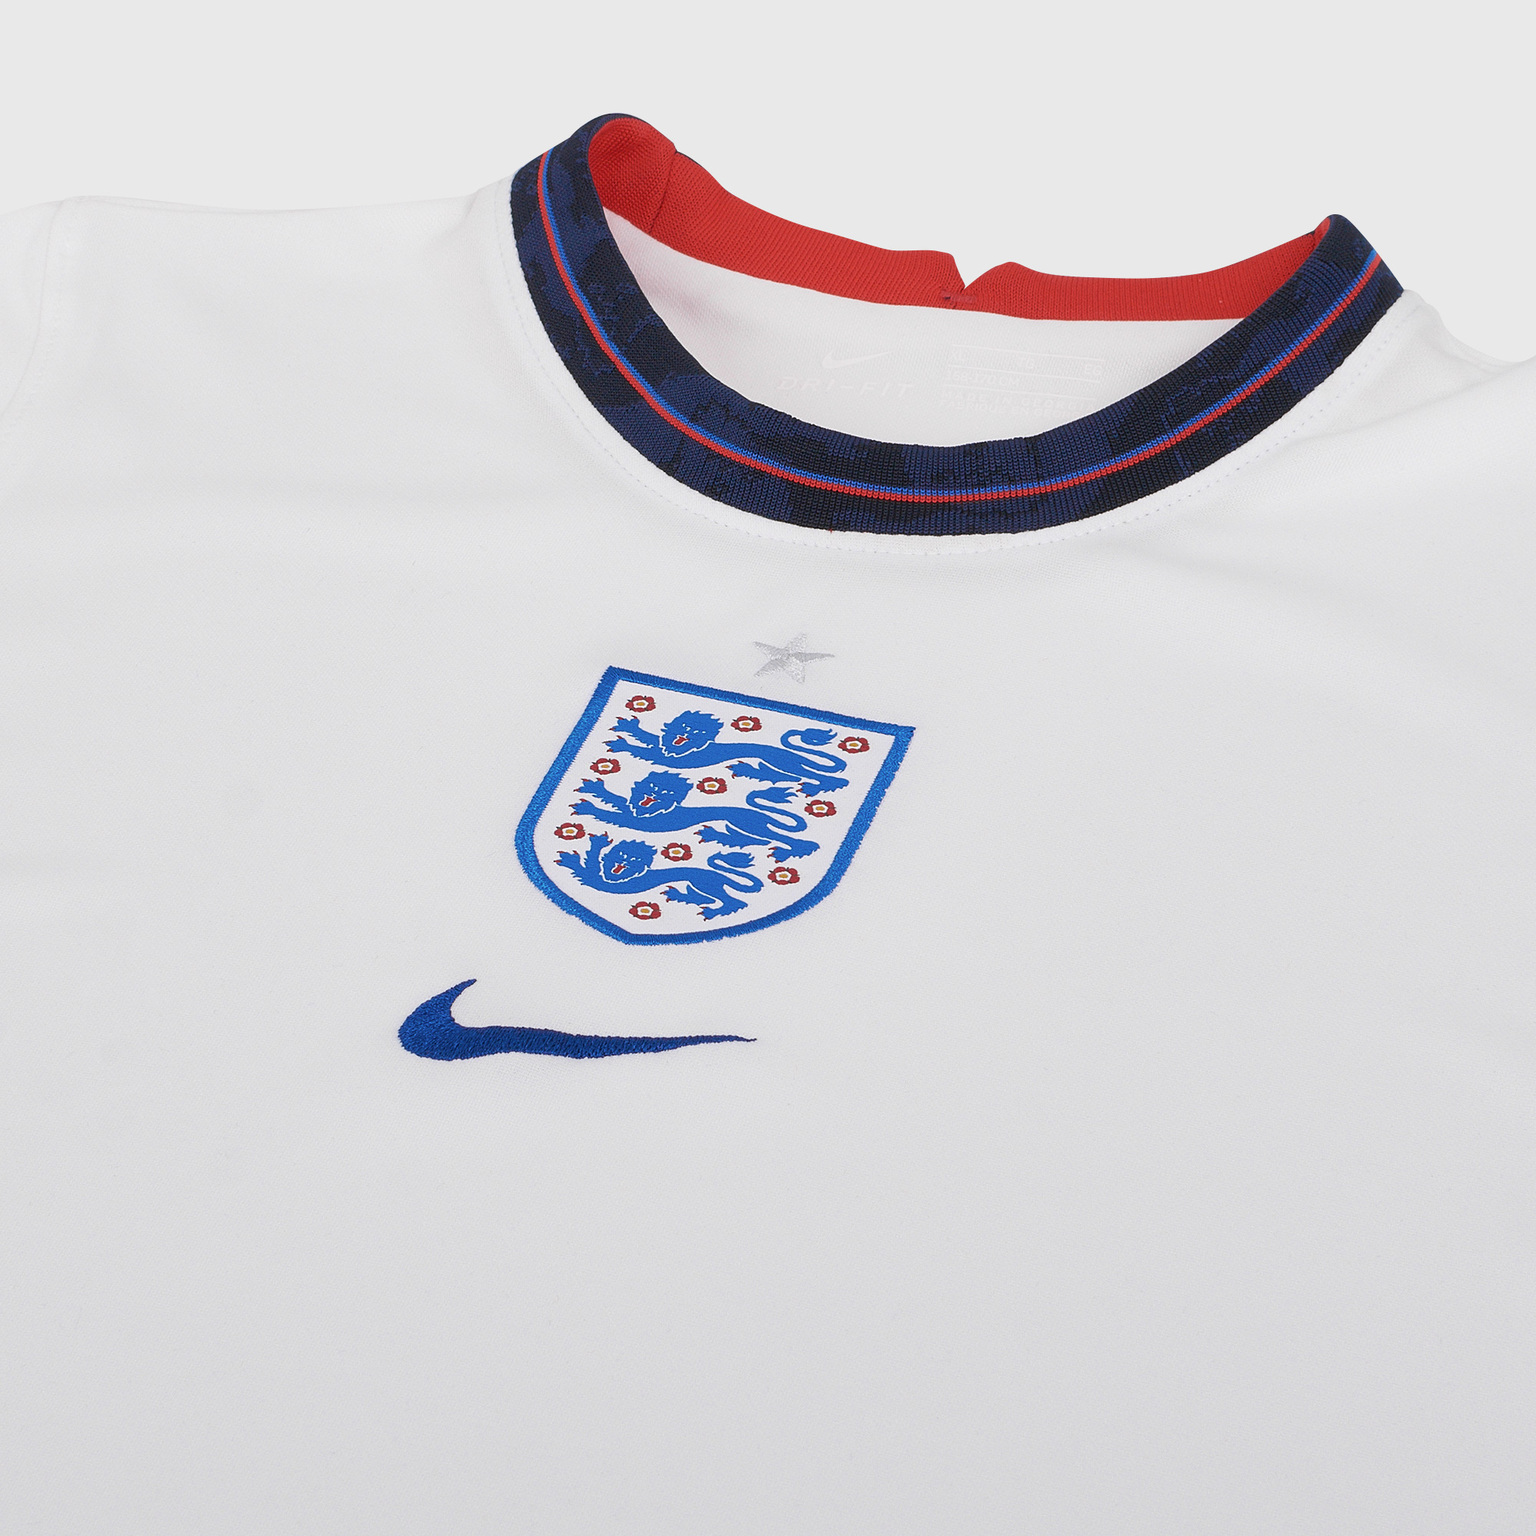 Футболка домашняя подростковая Nike сборной Англии сезон 2020/21